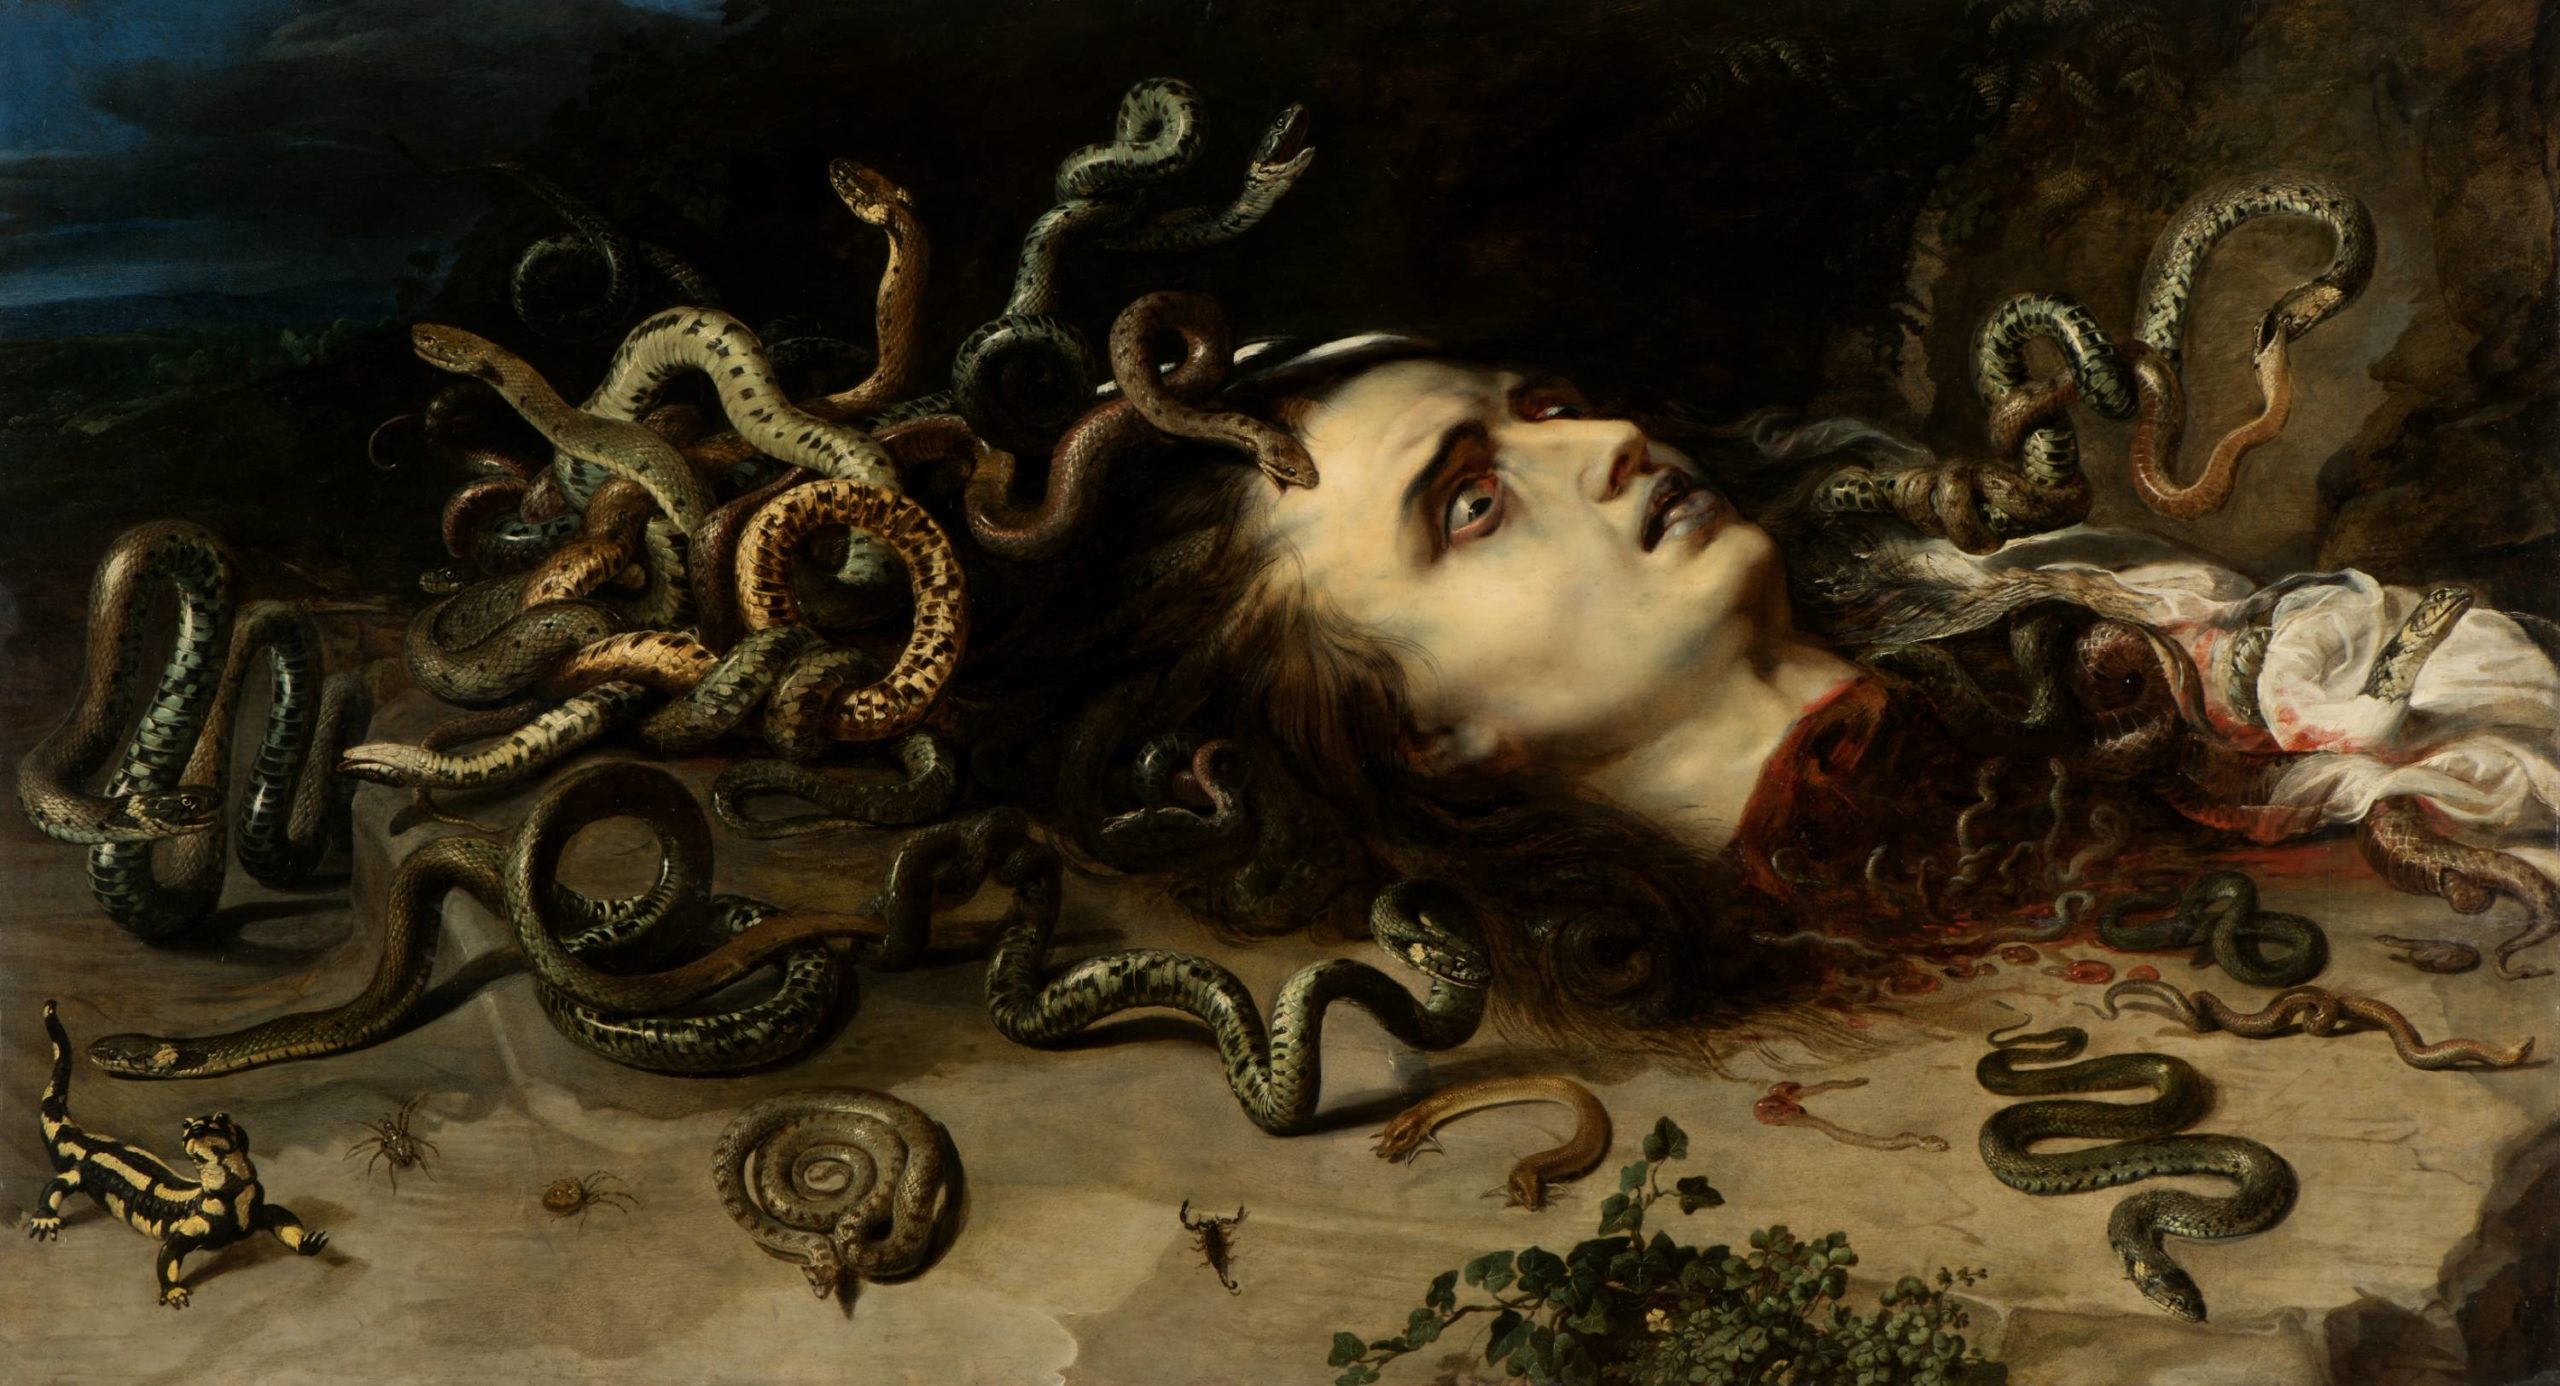 Animals in art - painting of Medusa